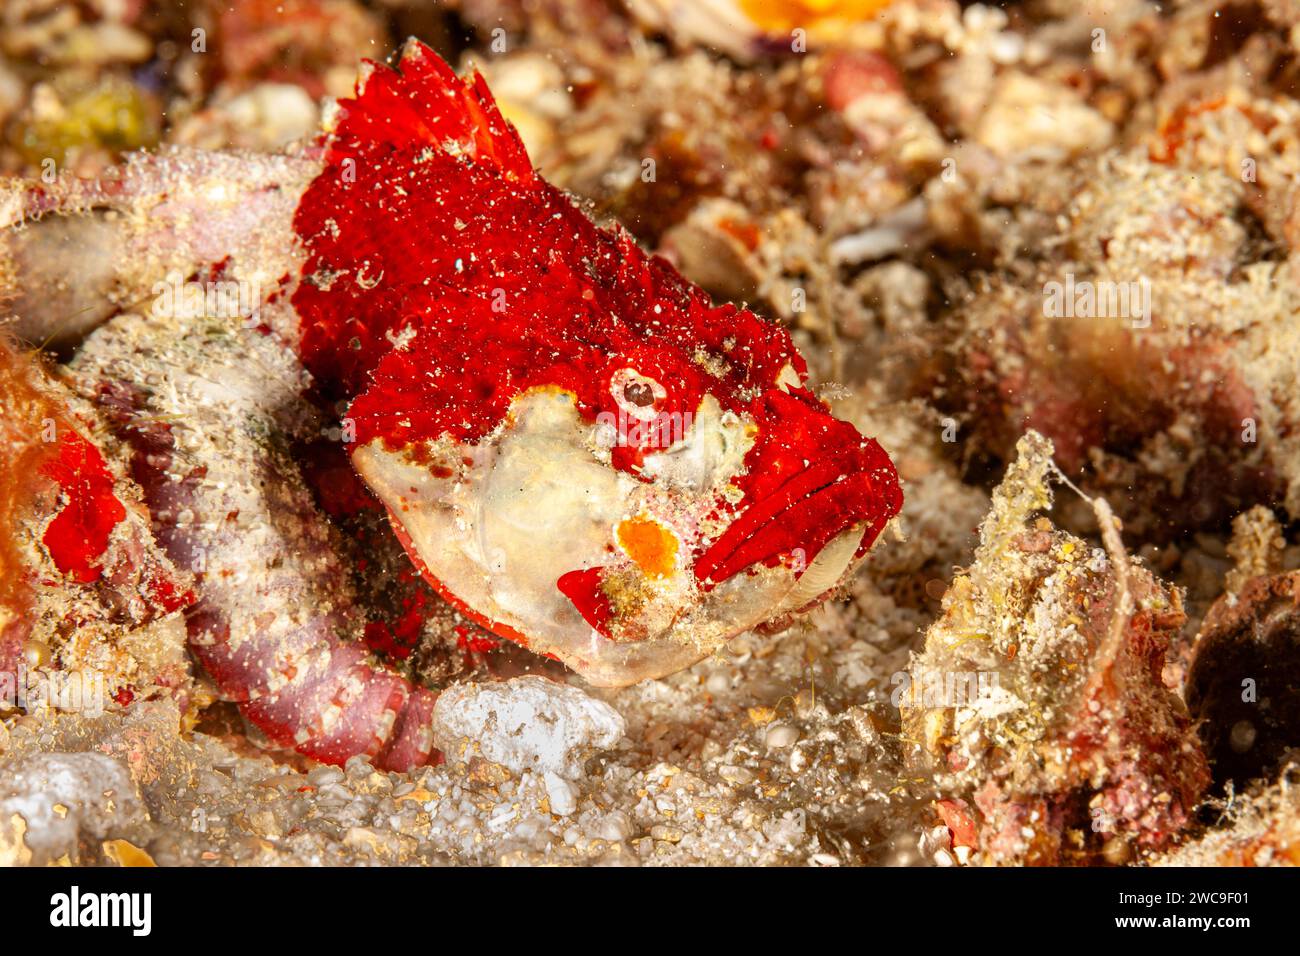 Malaysia, Sabah, Mabul, Red tassled Scorpionfish (Scorpaenopsis oxycephalus) Stock Photo